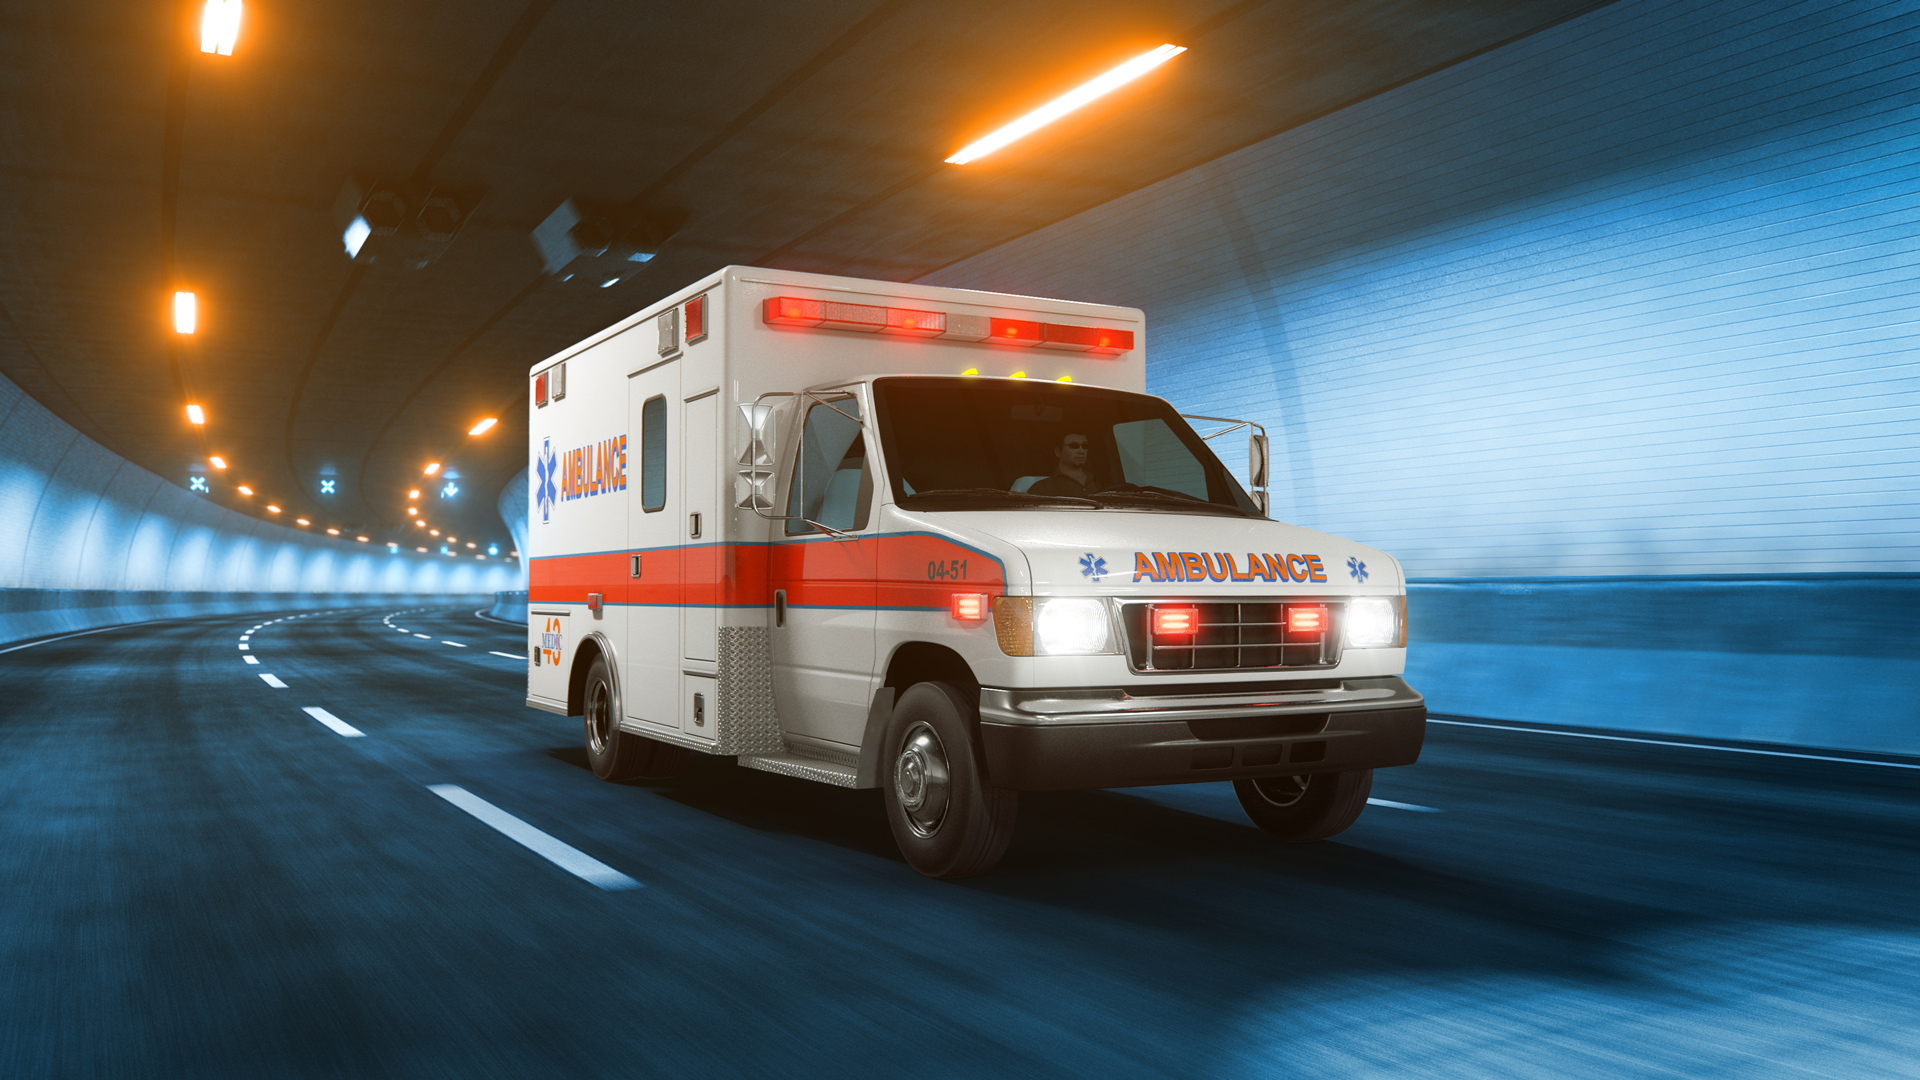 Ambulance coding solutions